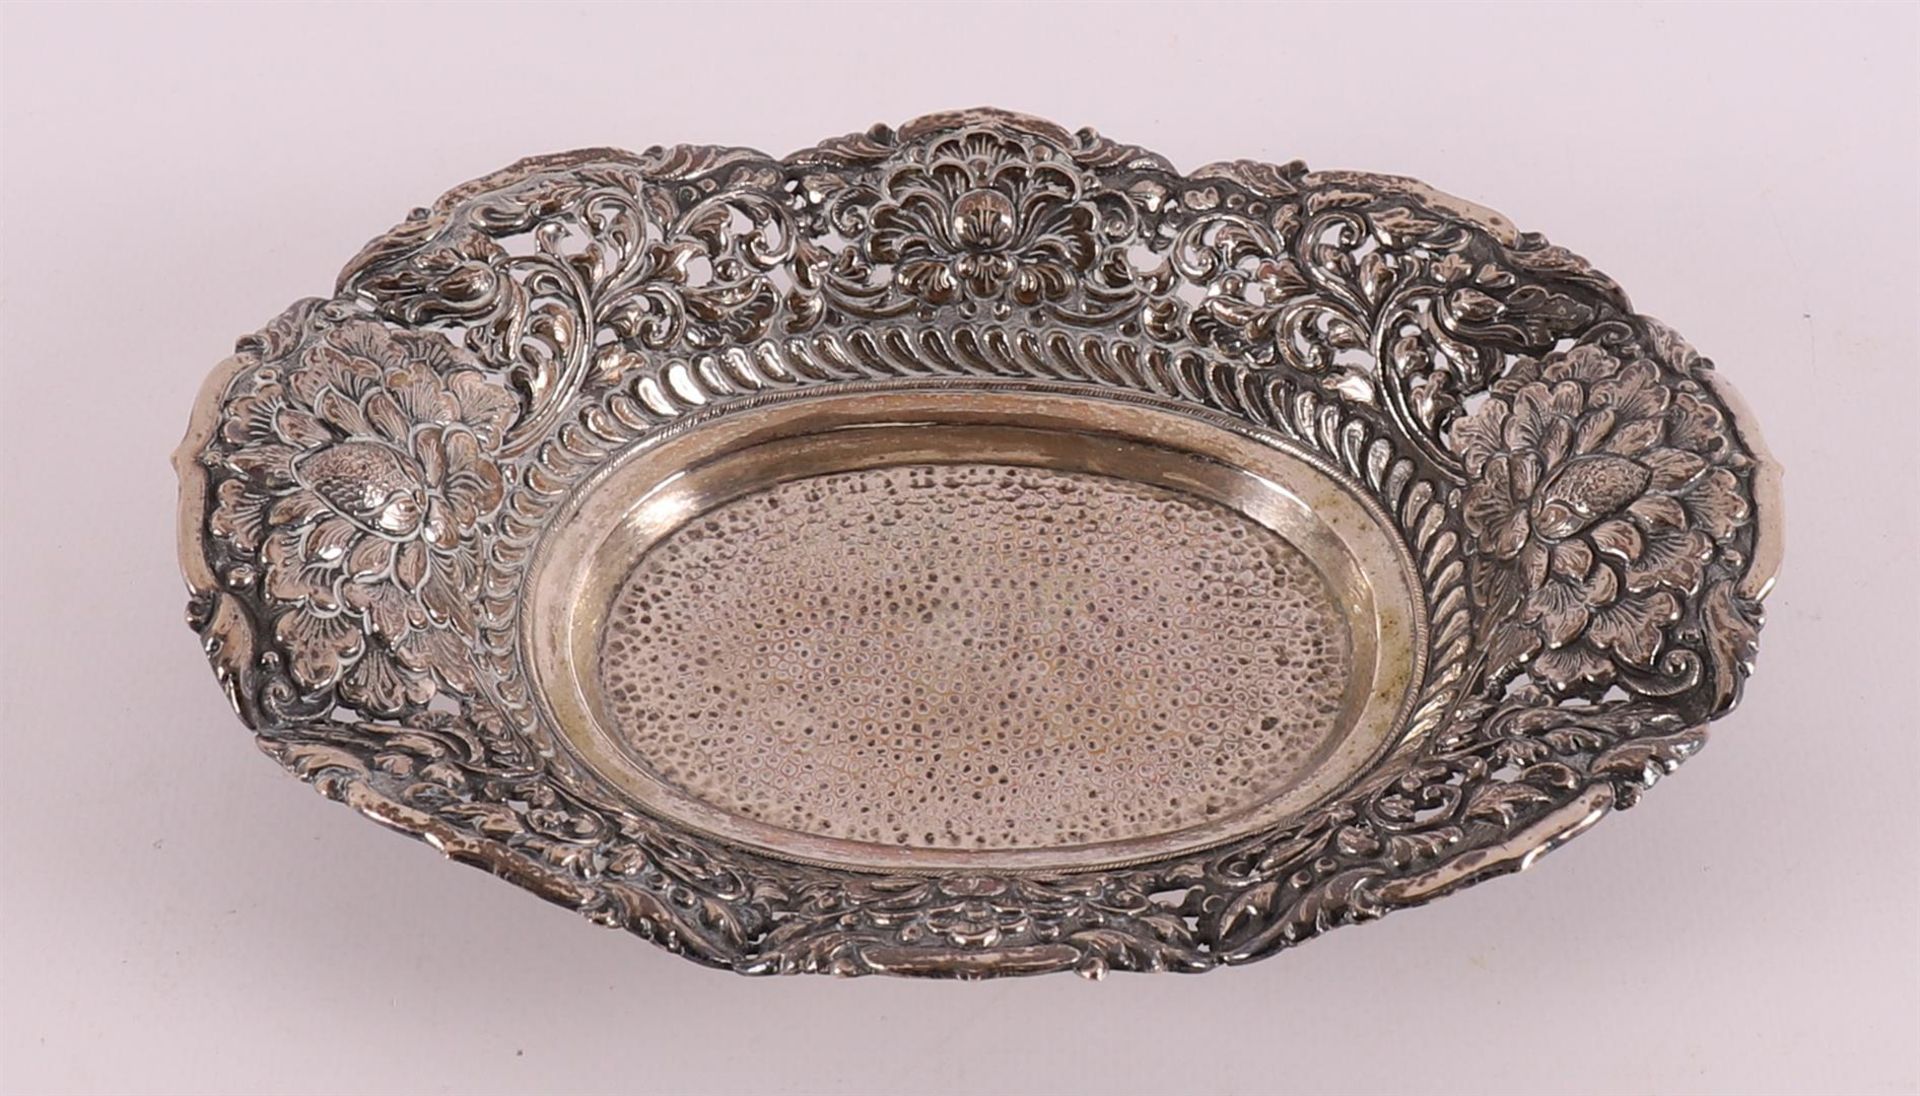 A Djokja 3rd grade 800/1000 silver oval bowl, 1st half 20th century.